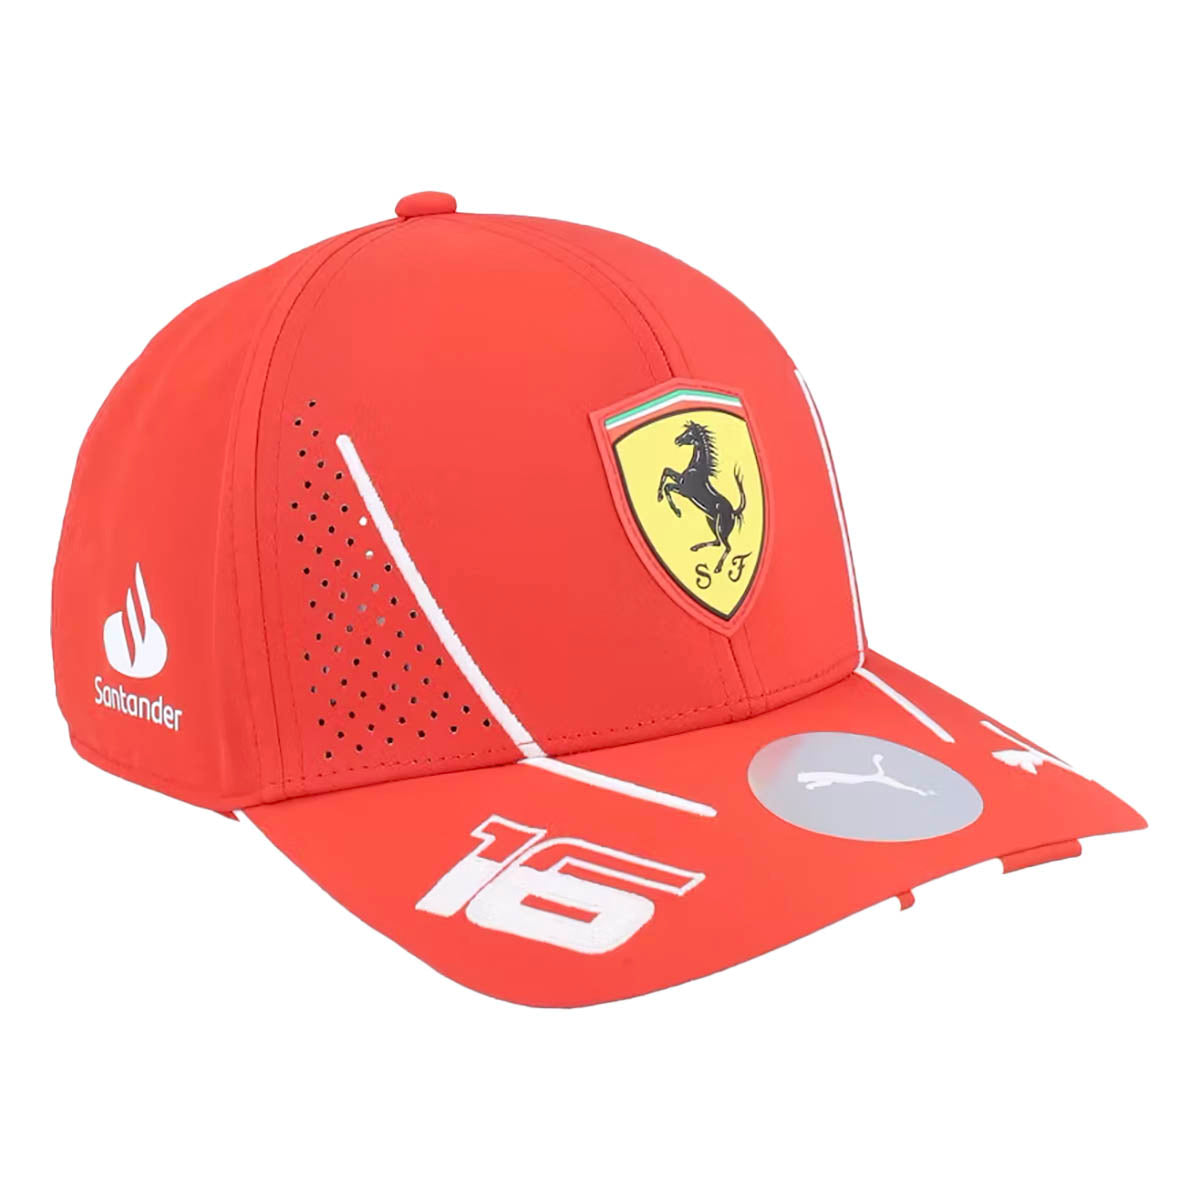 Ferrari – TracksVR